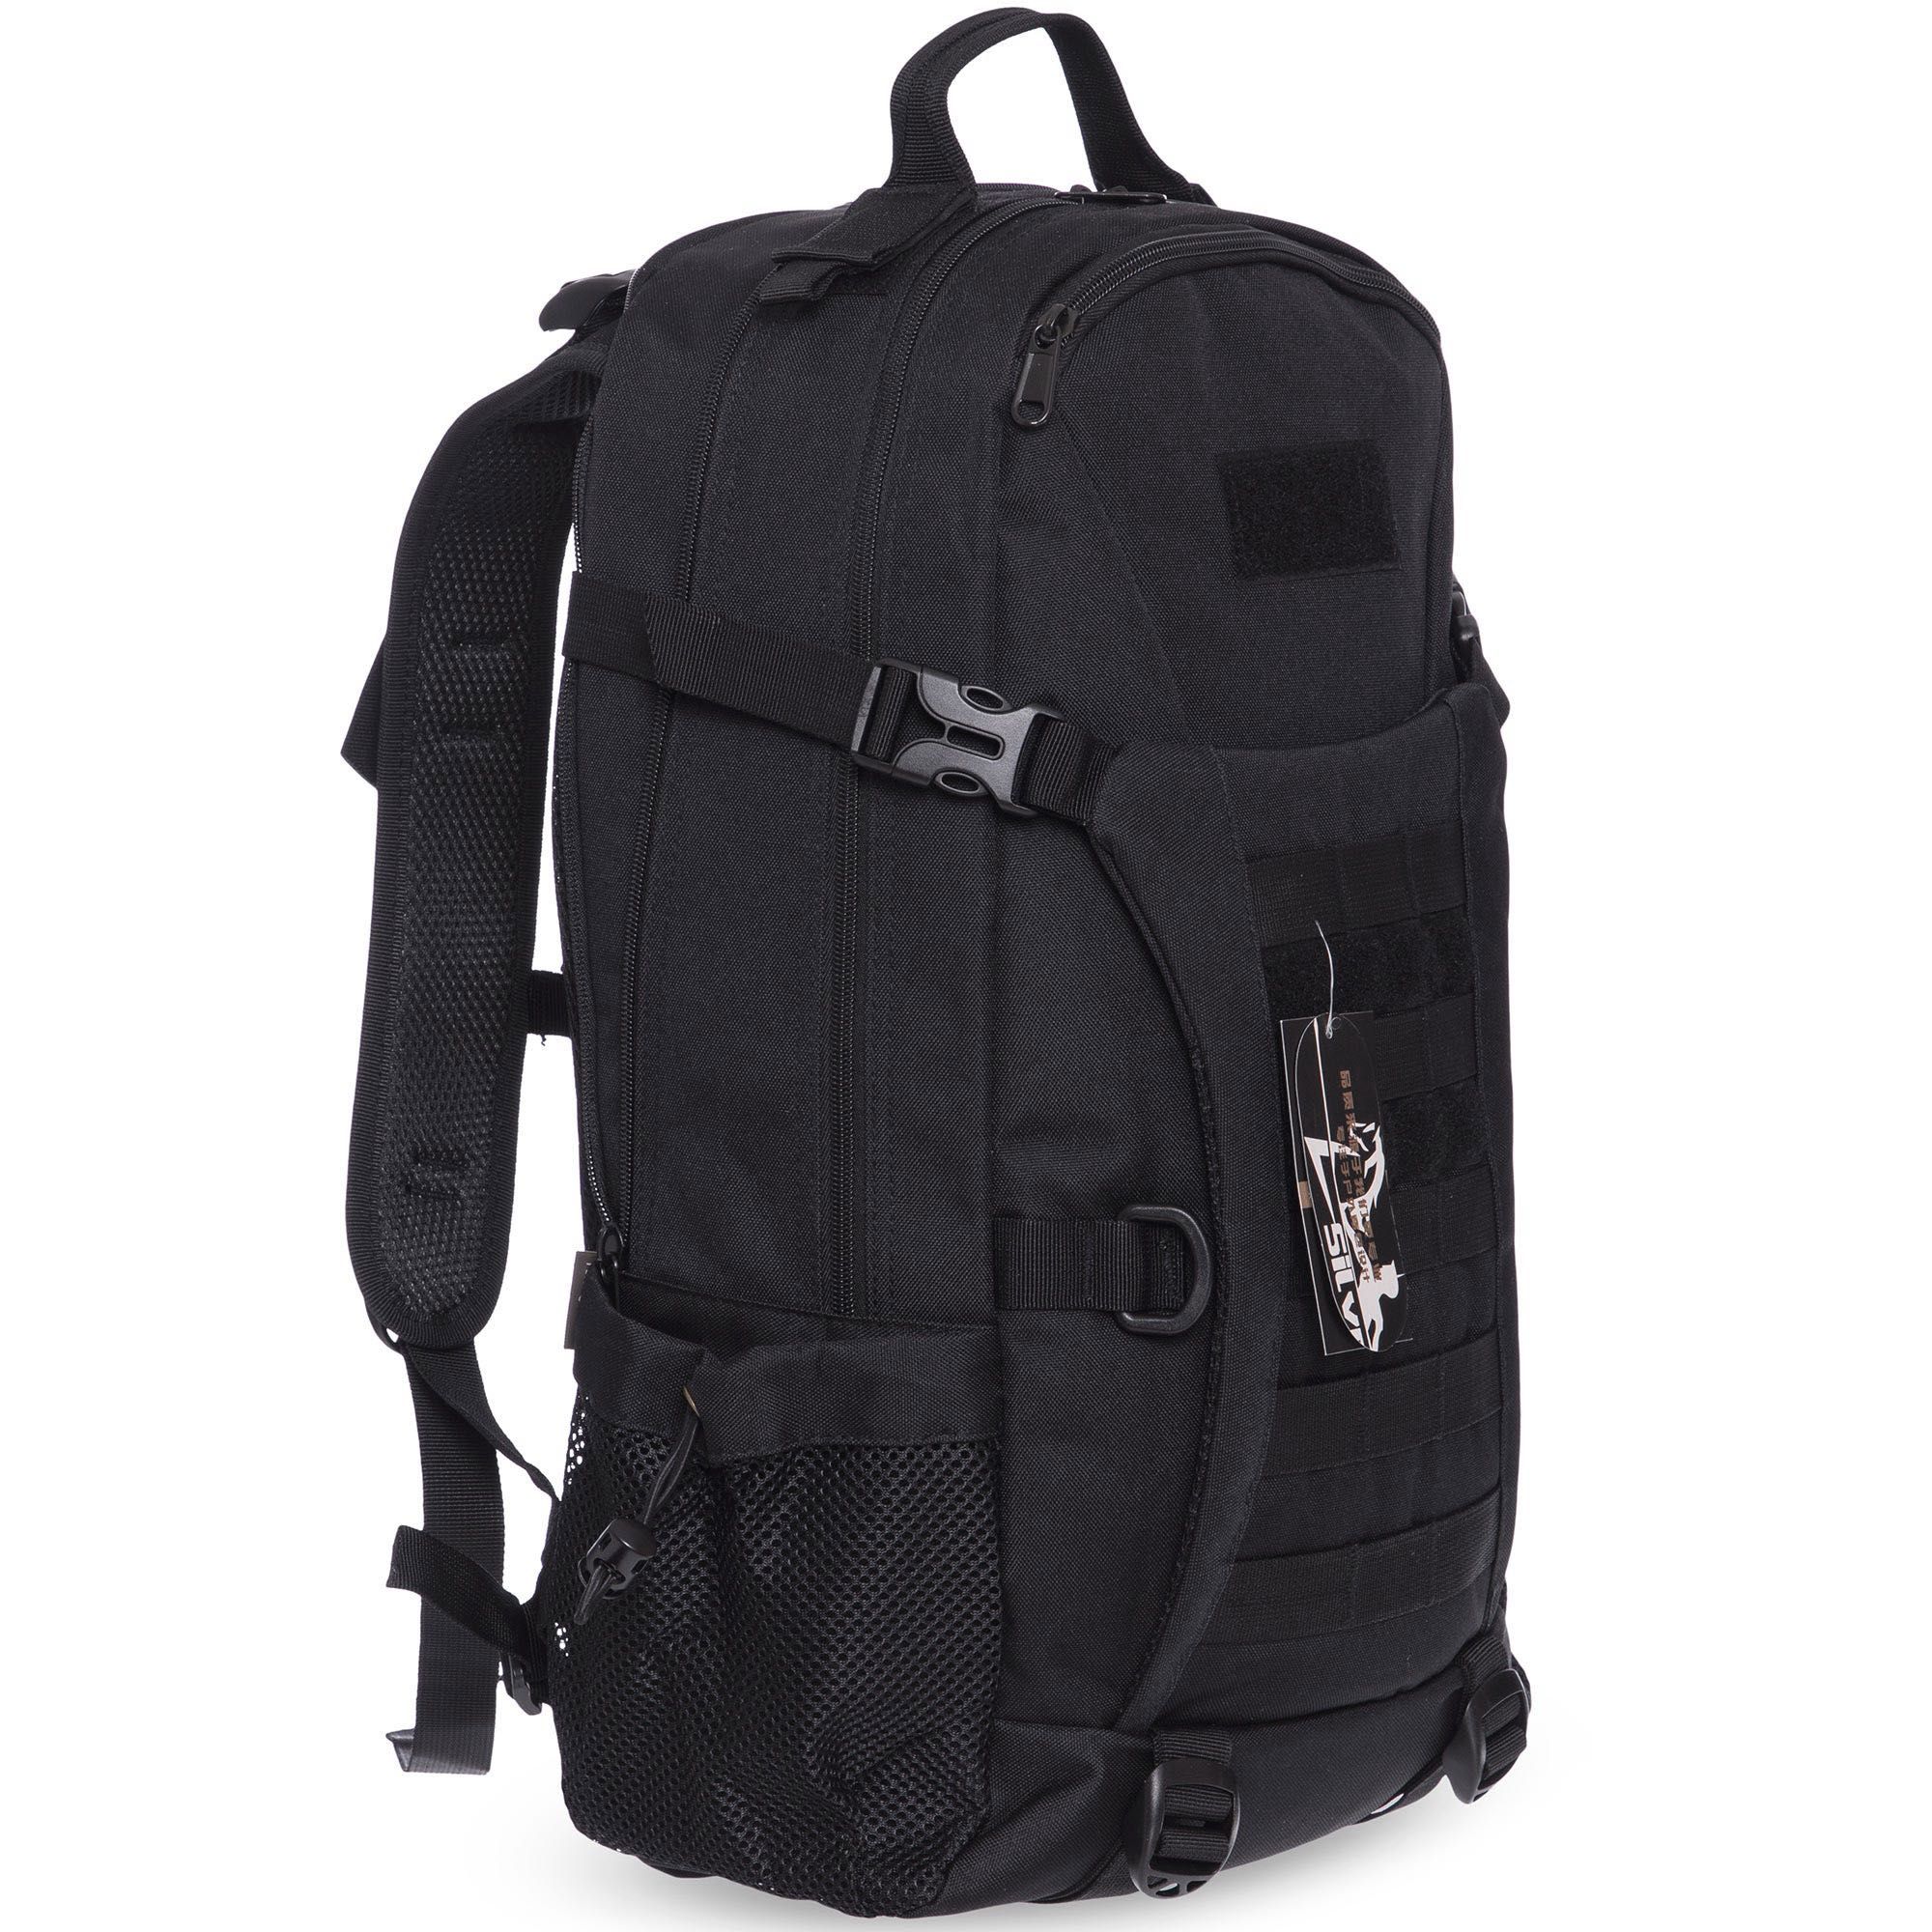 Рюкзак тактический штурмовой SILVER KNIGHT TY-9396 размер 49х27х18 см